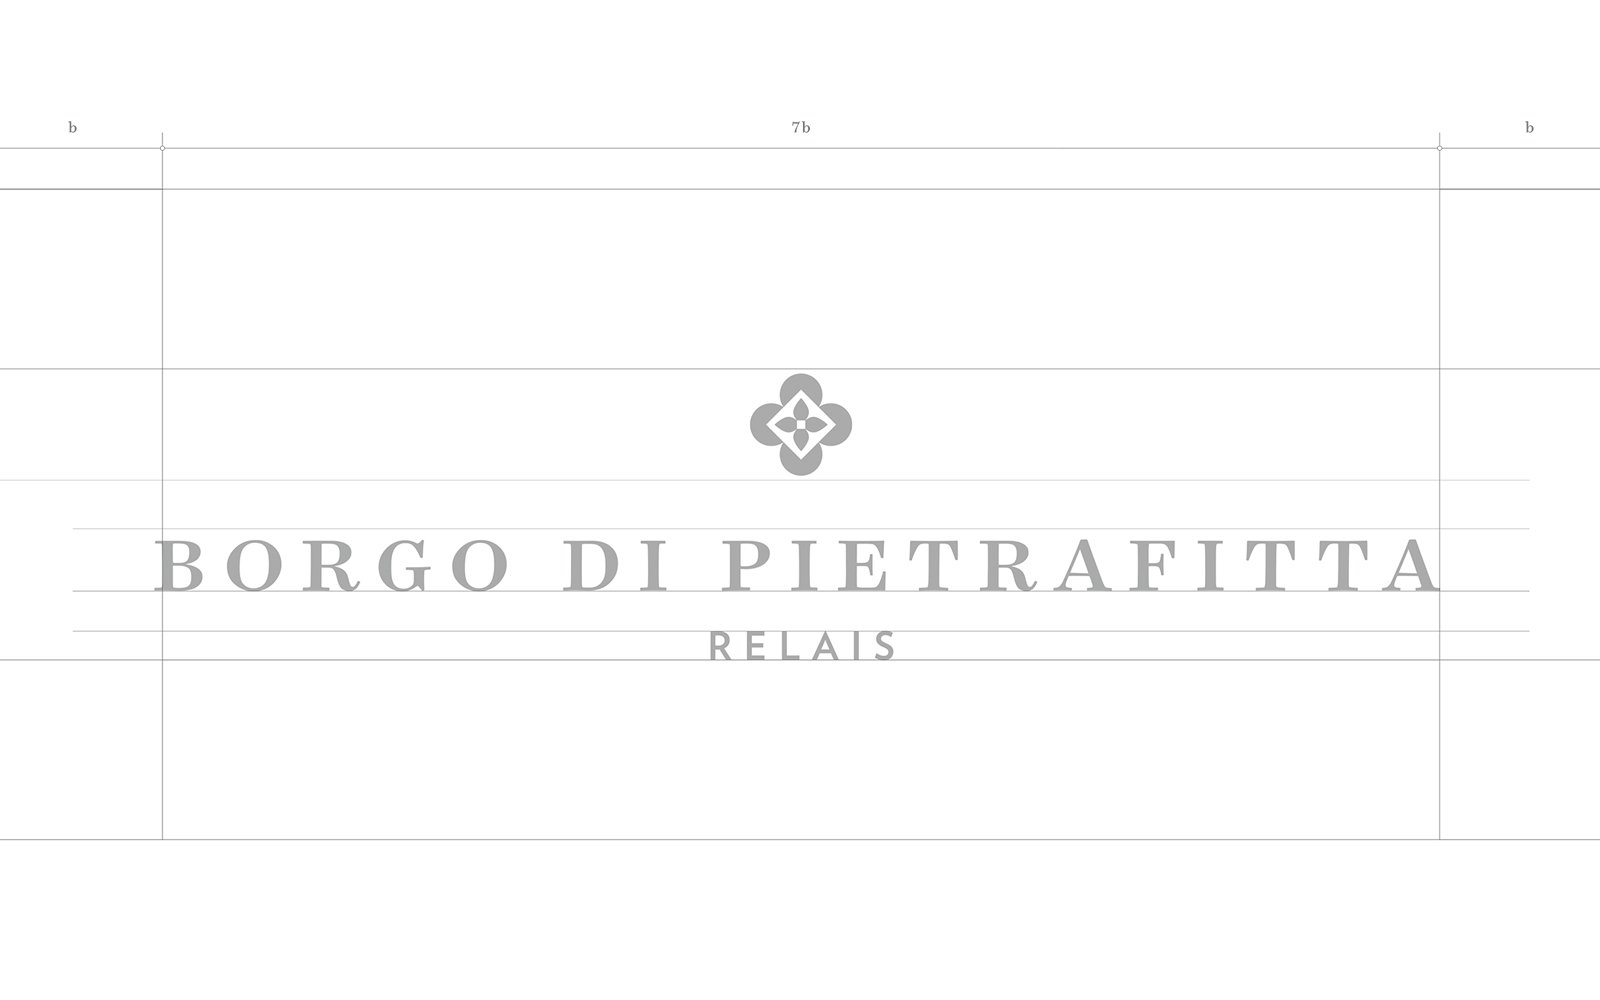 Das Borgo di Pietrafitta und sein neues Image